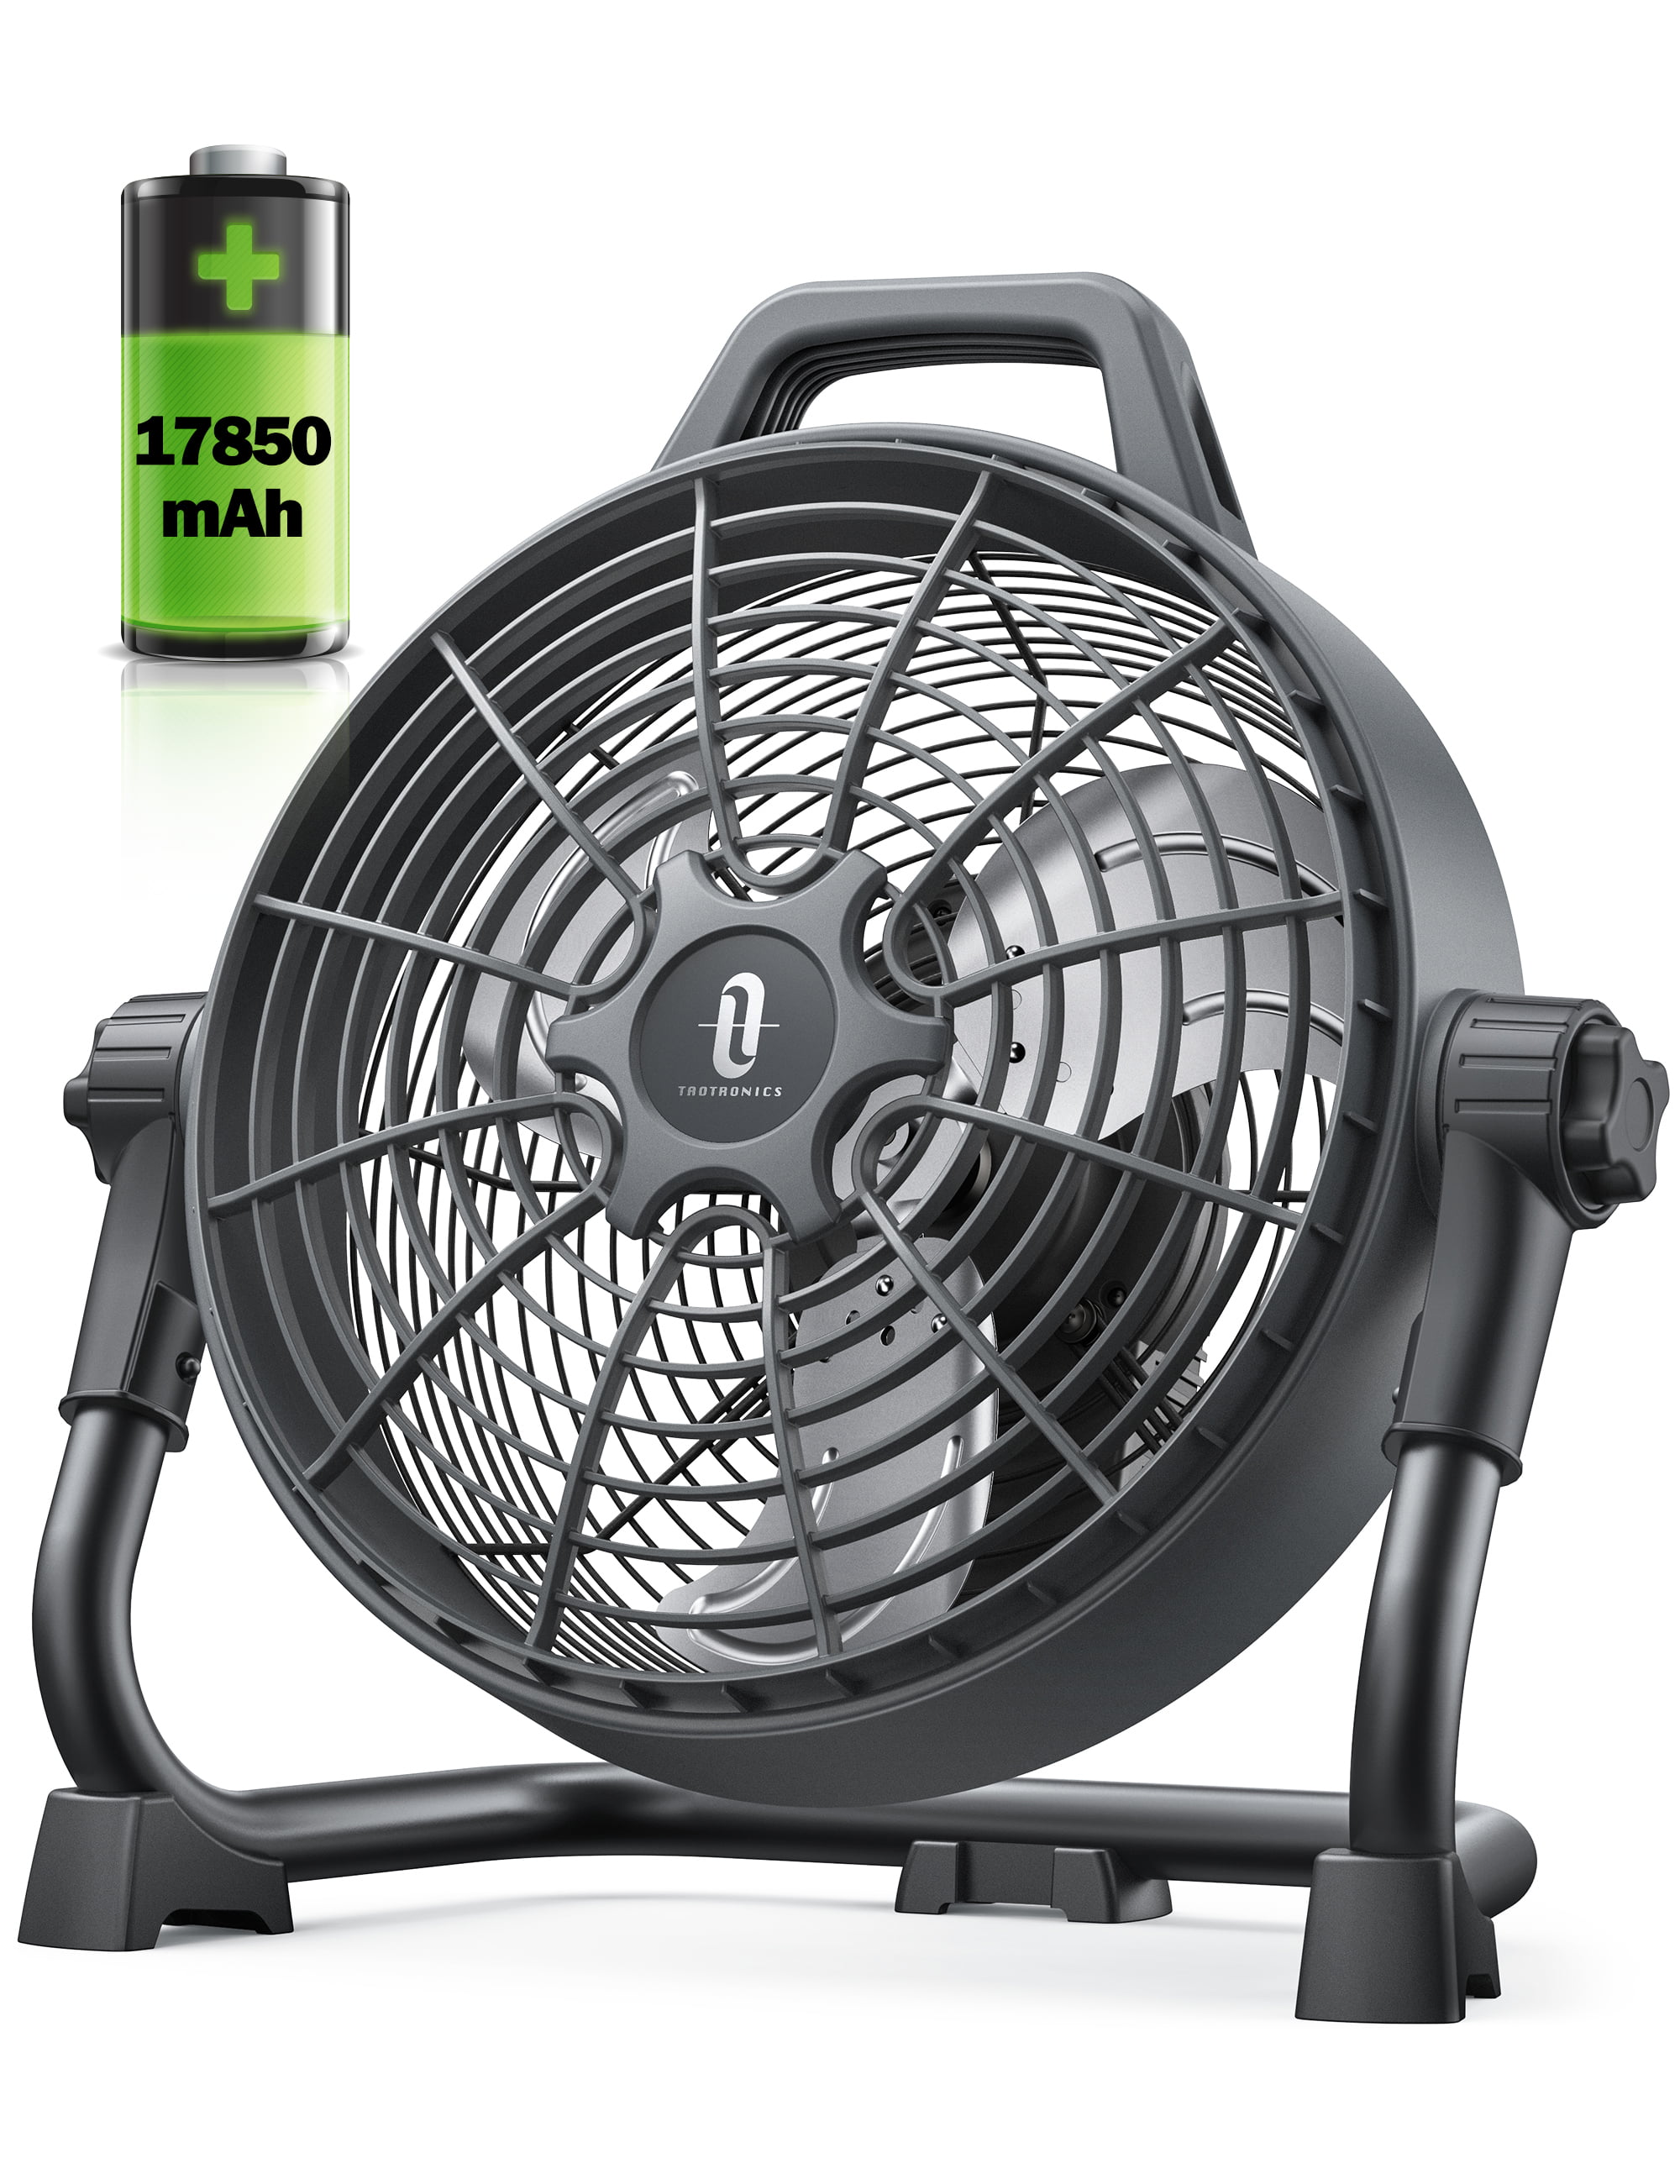 TaoTronics Rechargeable Floor Fan, 17850 mAh Battery Outdoor Portable Fab, 1700 CFM Airflow, Stepless Speed Control, 220° Adjustable Head, IPX4 Waterproof